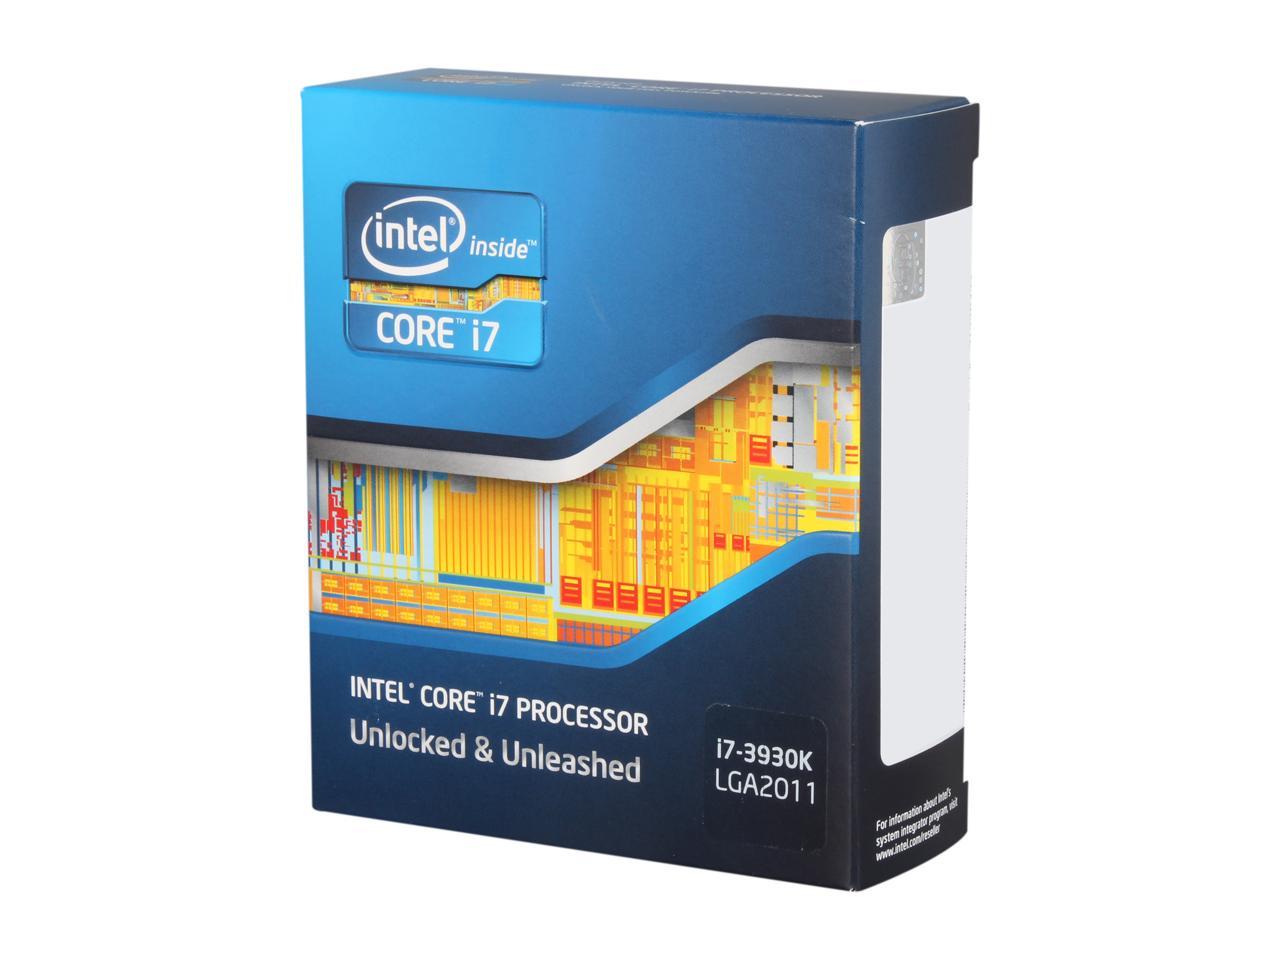 kaping Aanhoudend Opblazen Intel Core i7-3930K - Core i7 3rd Gen Sandy Bridge-E 6-Core 3.2GHz (3.8GHz  Turbo) LGA 2011 130W Desktop Processor - BX80619i73930K - Newegg.com